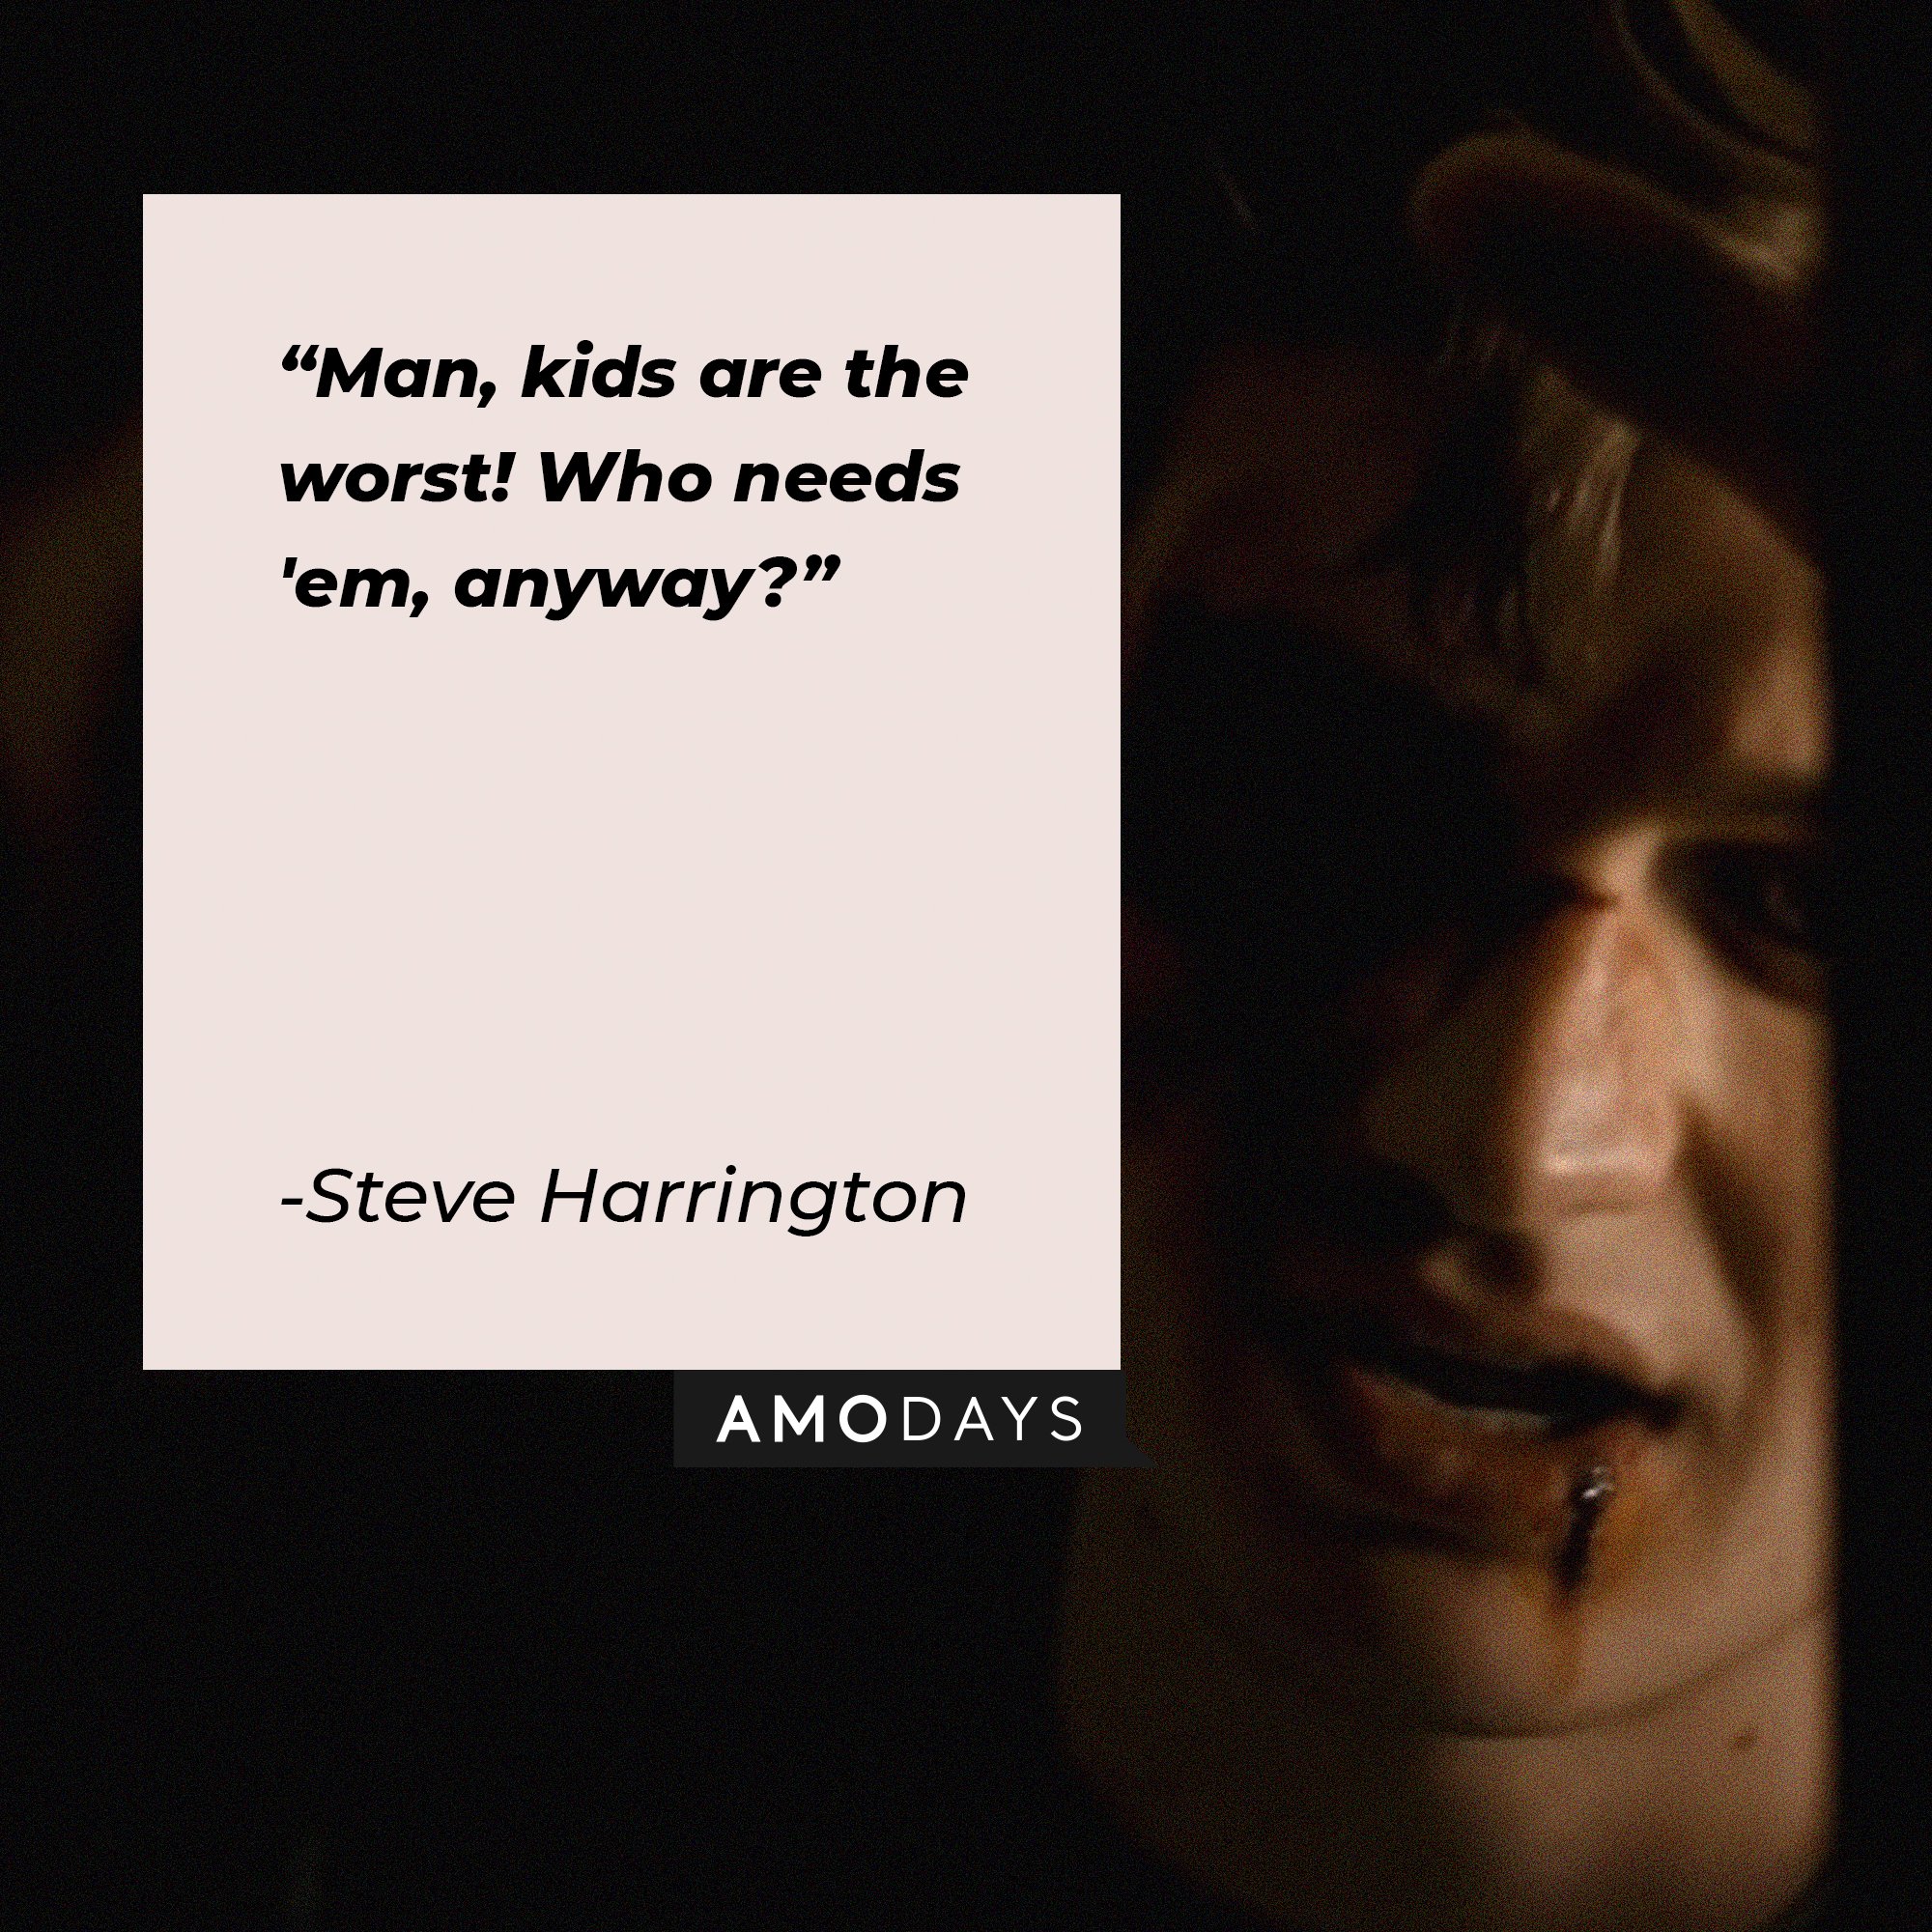  Steve Harrington's quote:  "Man, kids are the worst! Who needs 'em, anyway?" | Image: AmoDays  